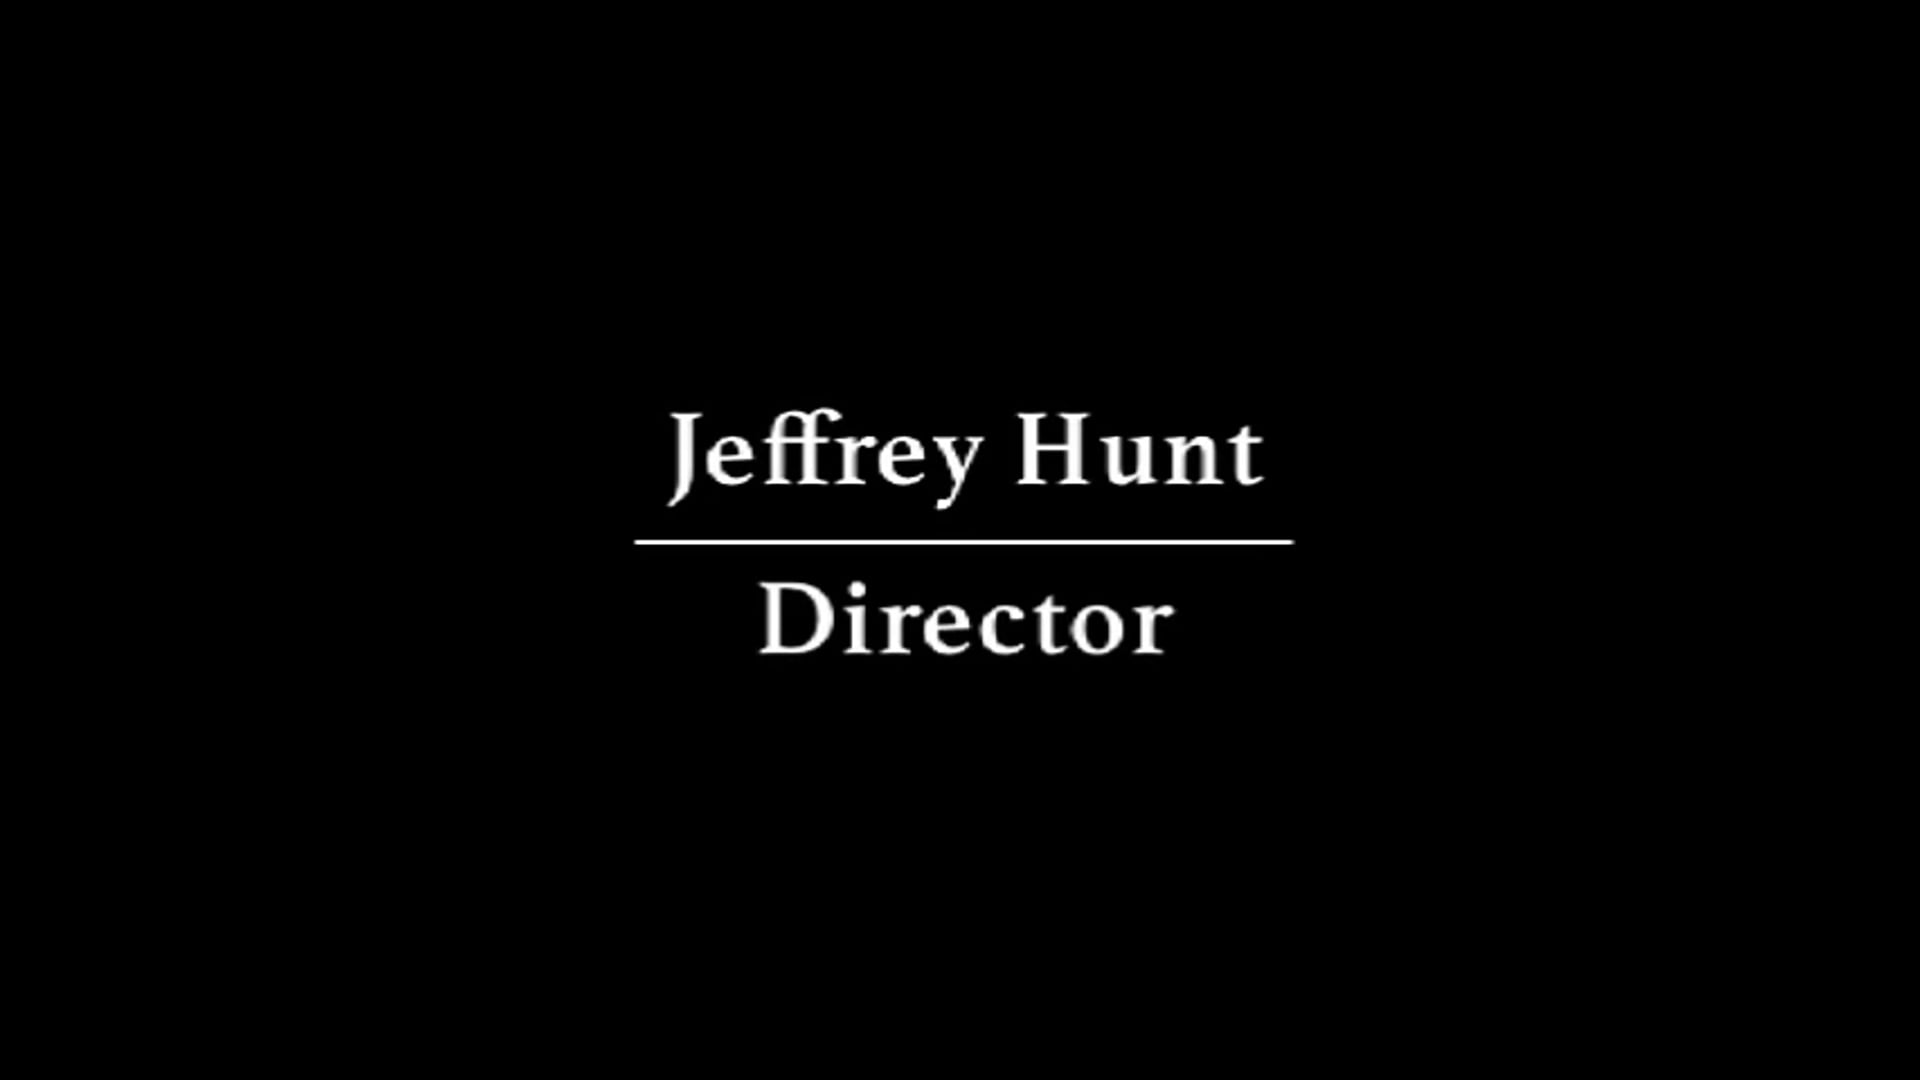 Jeffrey Hunt TV Director Production Reel